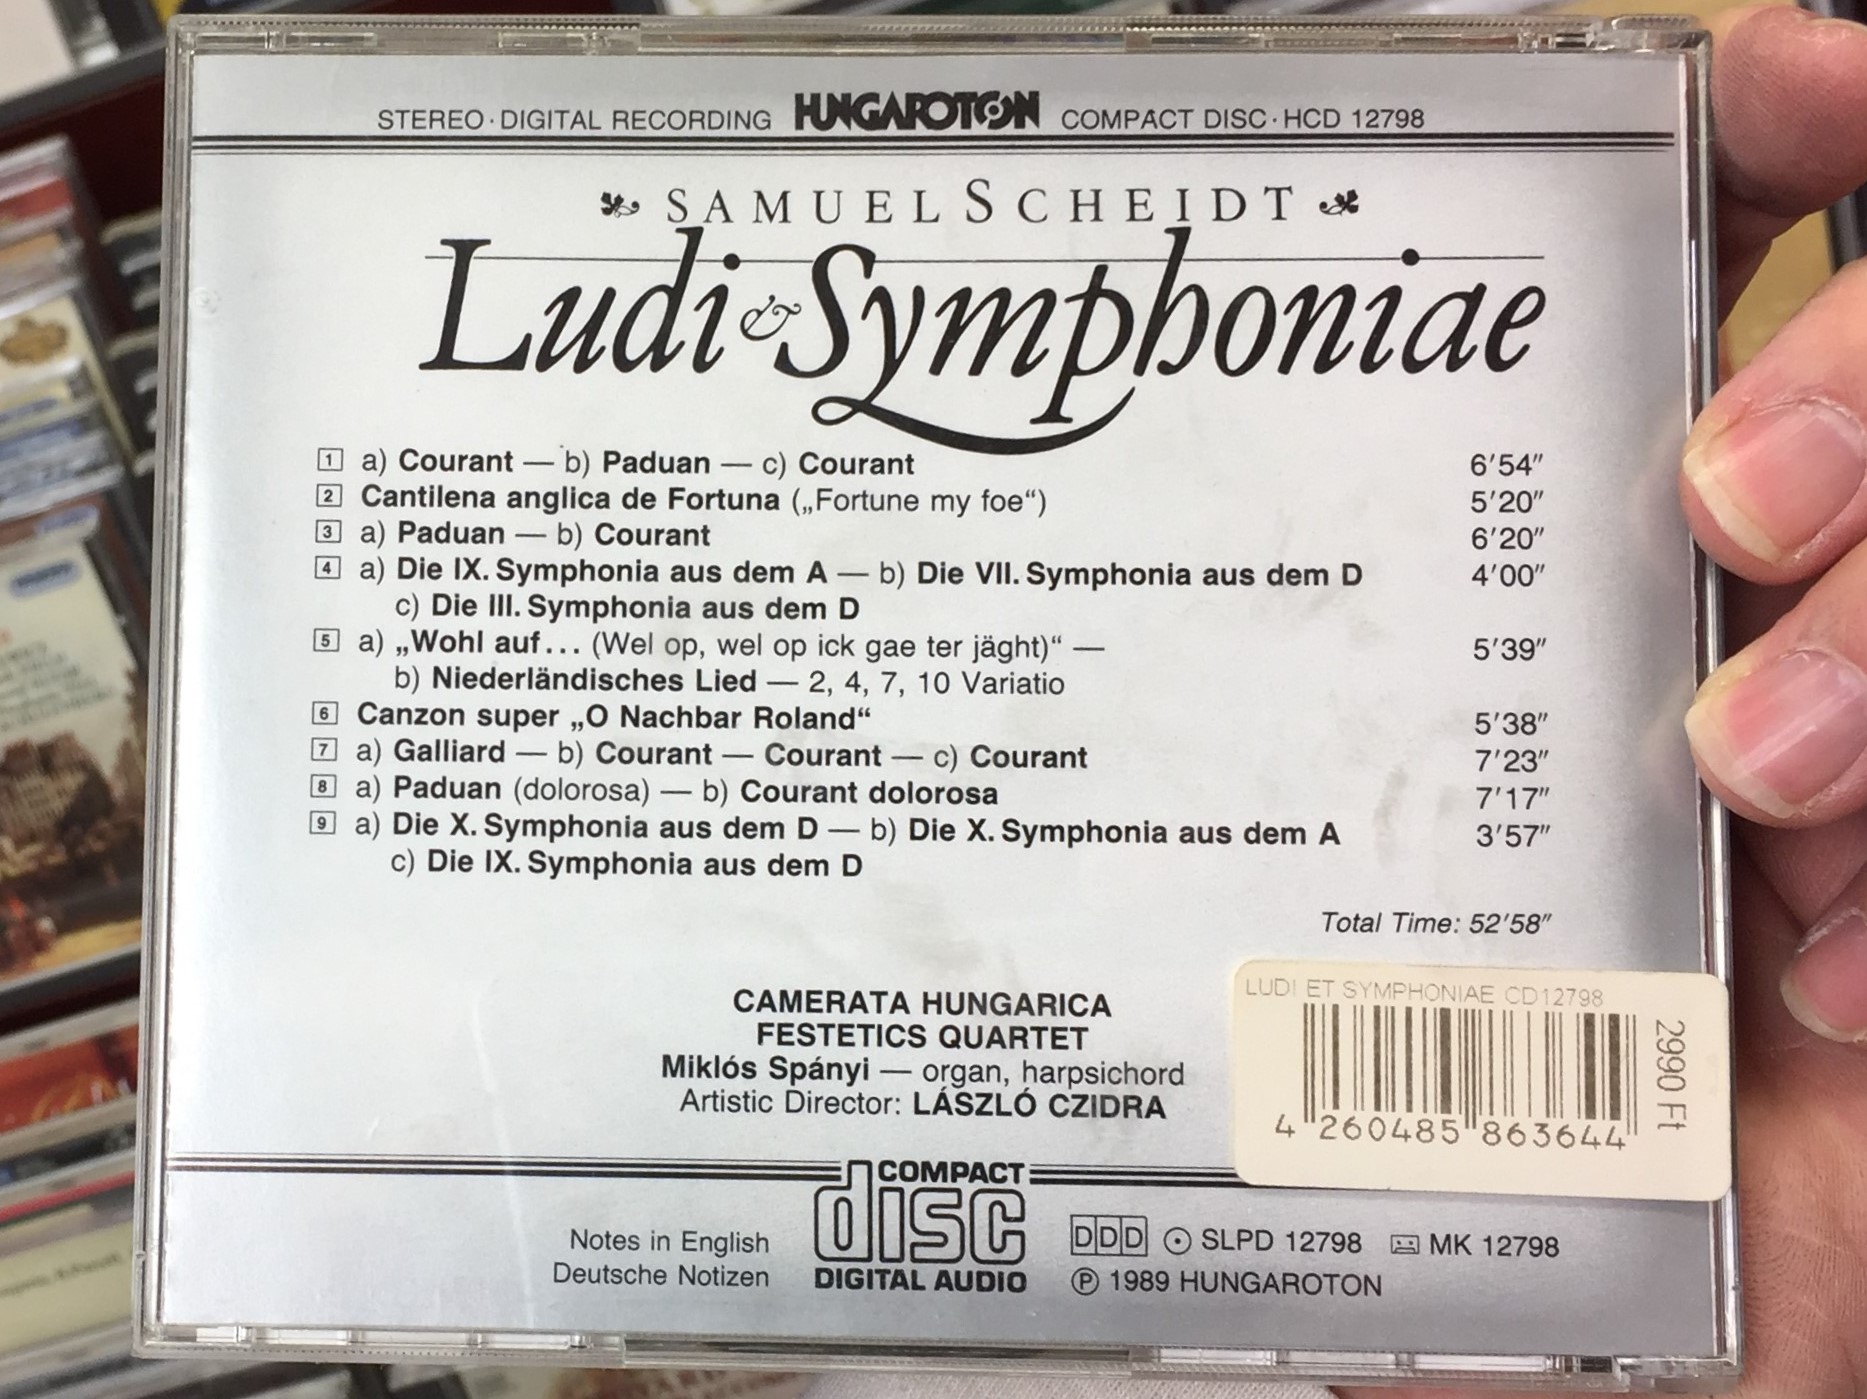 samuel-scheidt-ludi-symphoniae-camerata-hungarica-festetics-quartet-l-szl-czidra-hungaroton-classic-audio-cd-1989-stereo-hcd-12798-2-.jpg